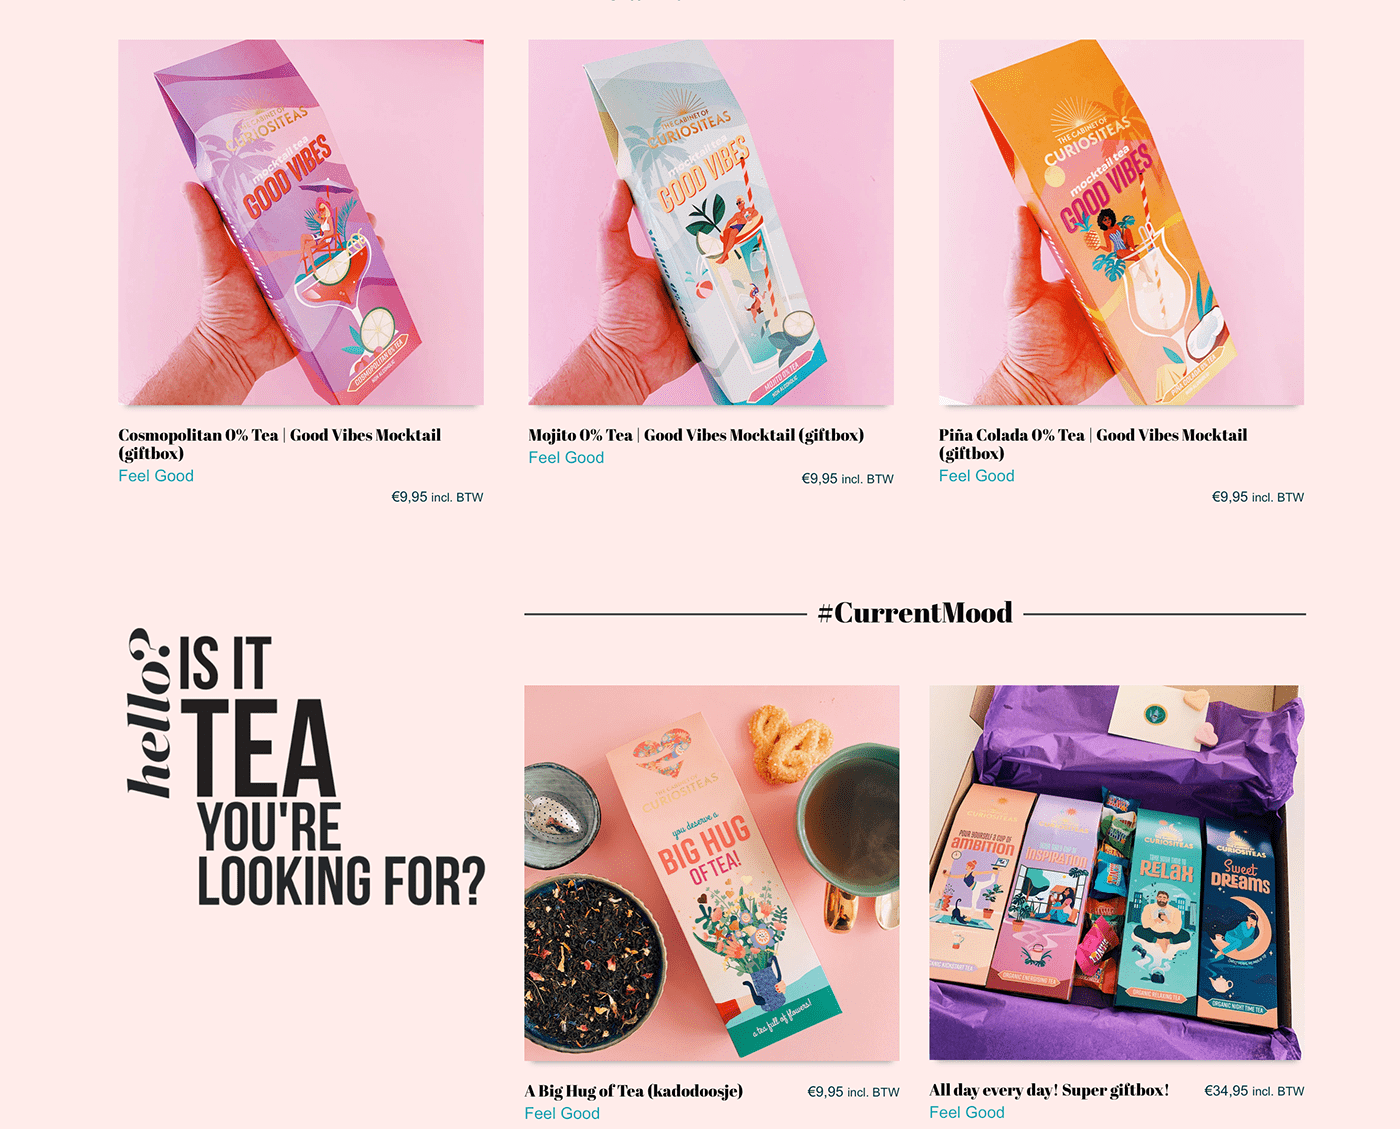 ambition cabinet curiositeas Packaging packaging illustration relax sweetdreams tea Tea Pack mocktails